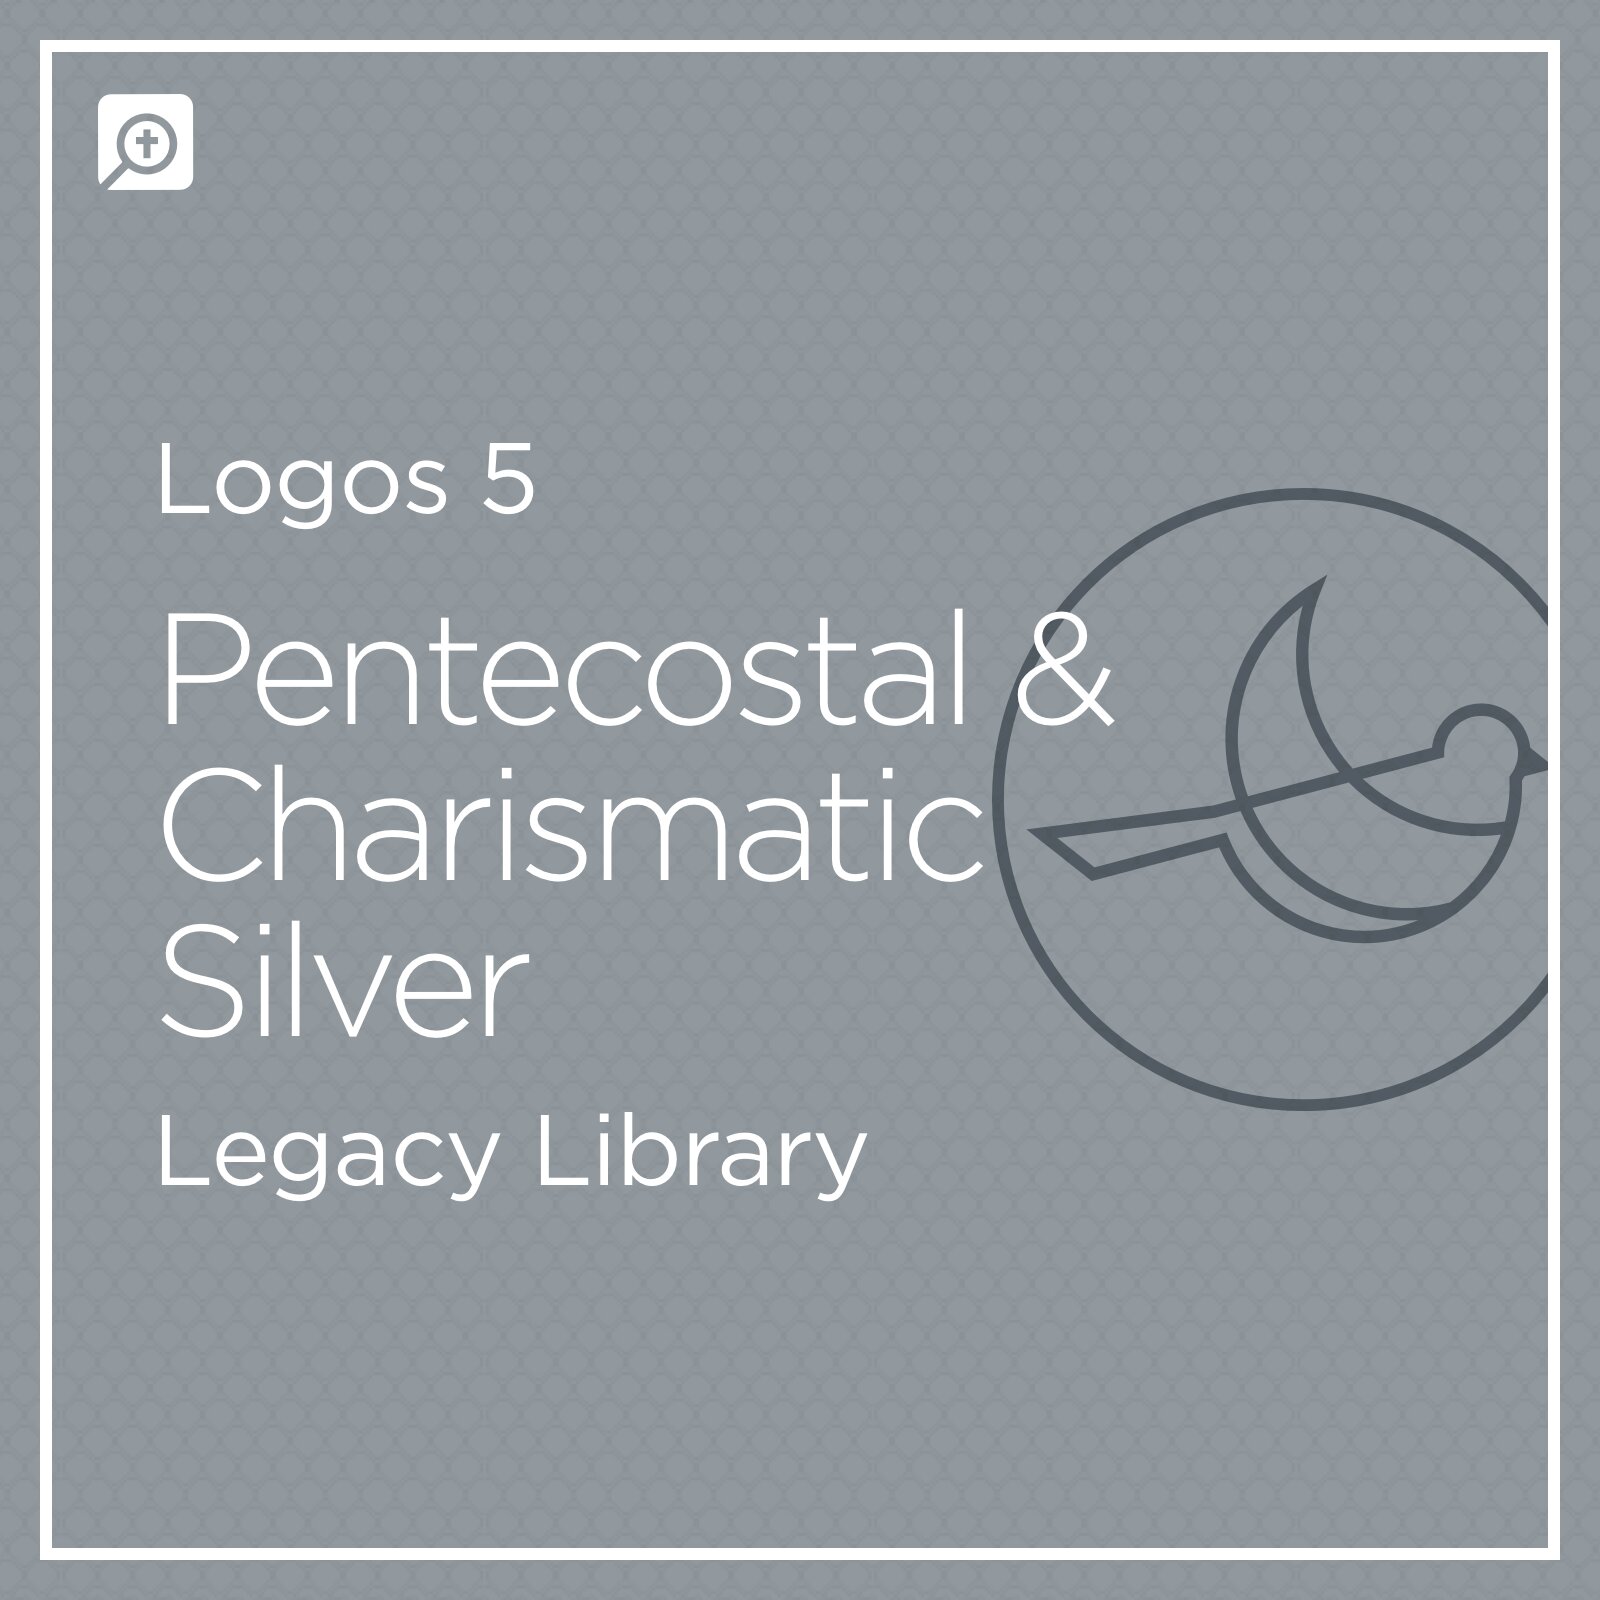 Logos 5 Pentecostal & Charismatic Silver Legacy Library